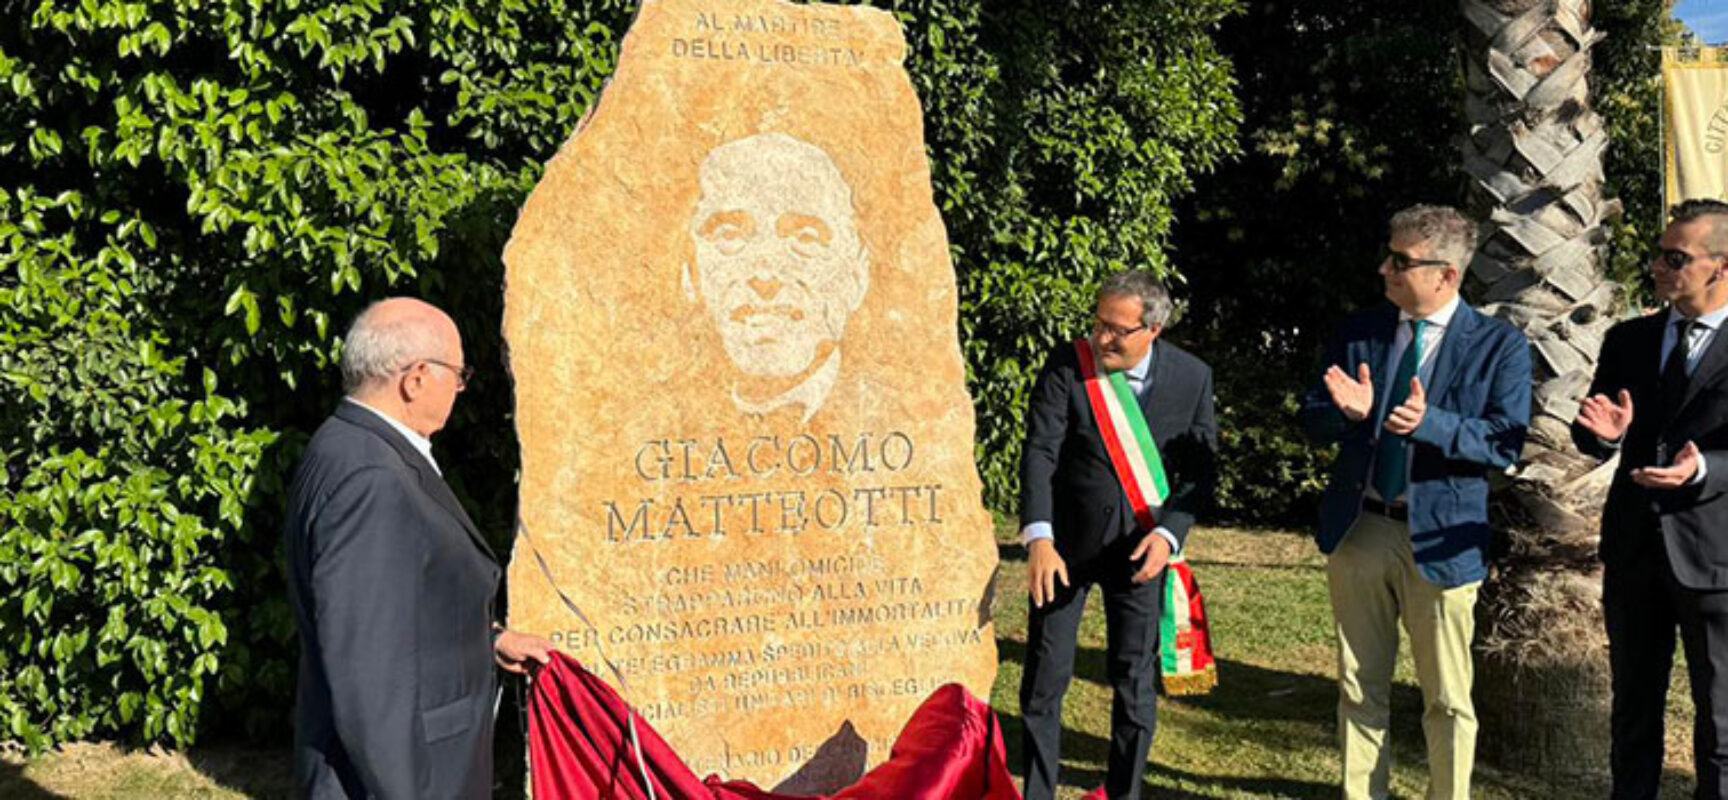 A Bisceglie inaugurata stele dedicata a Giacomo Matteotti